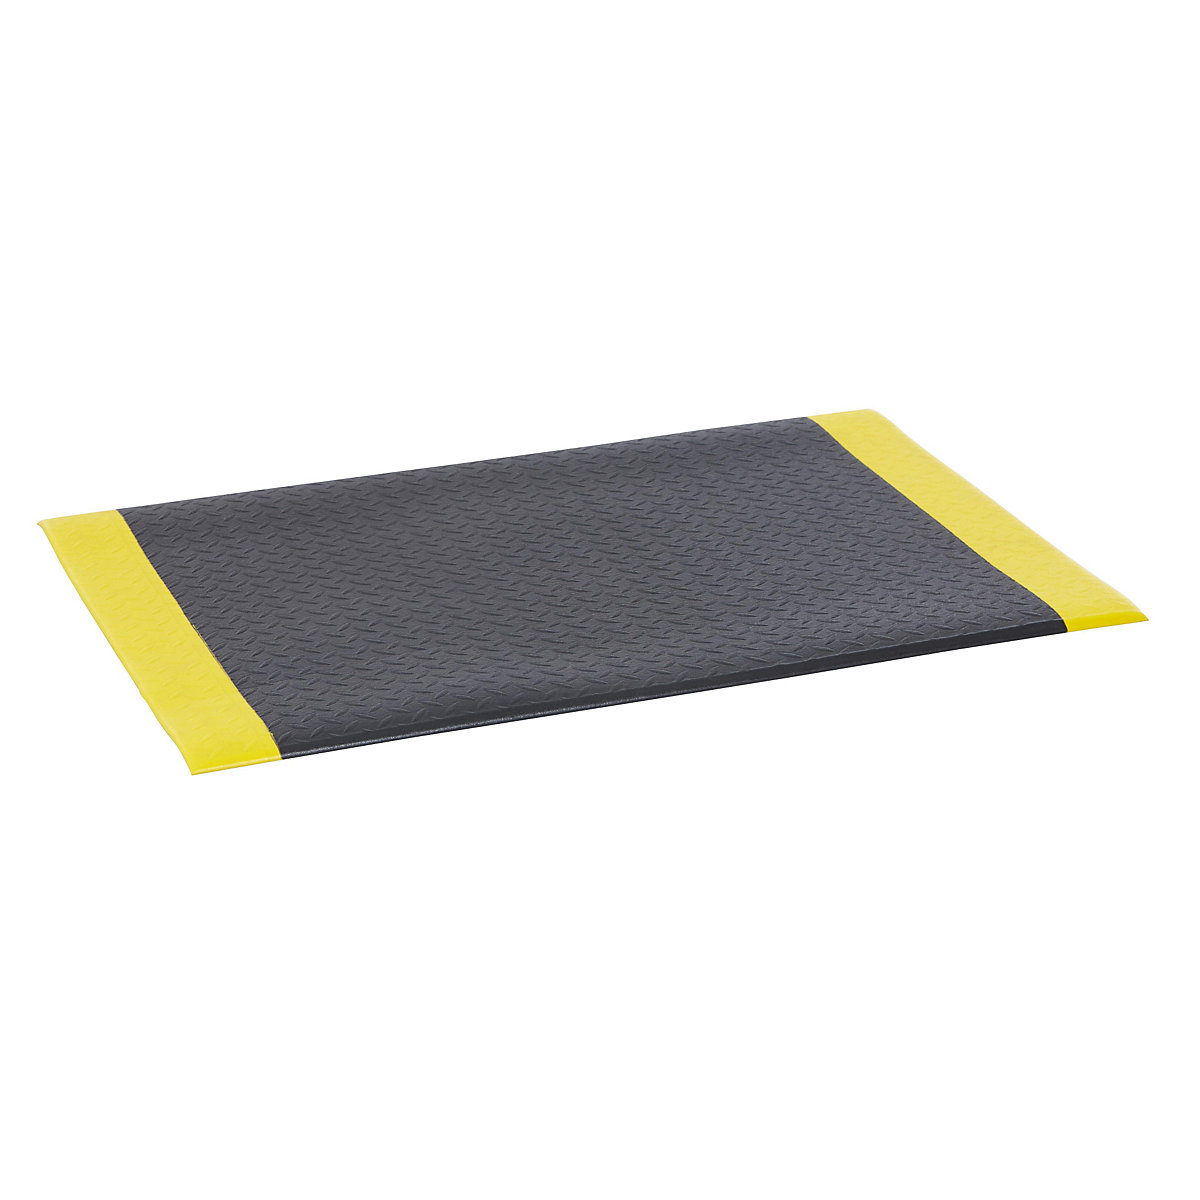 Anti-fatigue safety mat